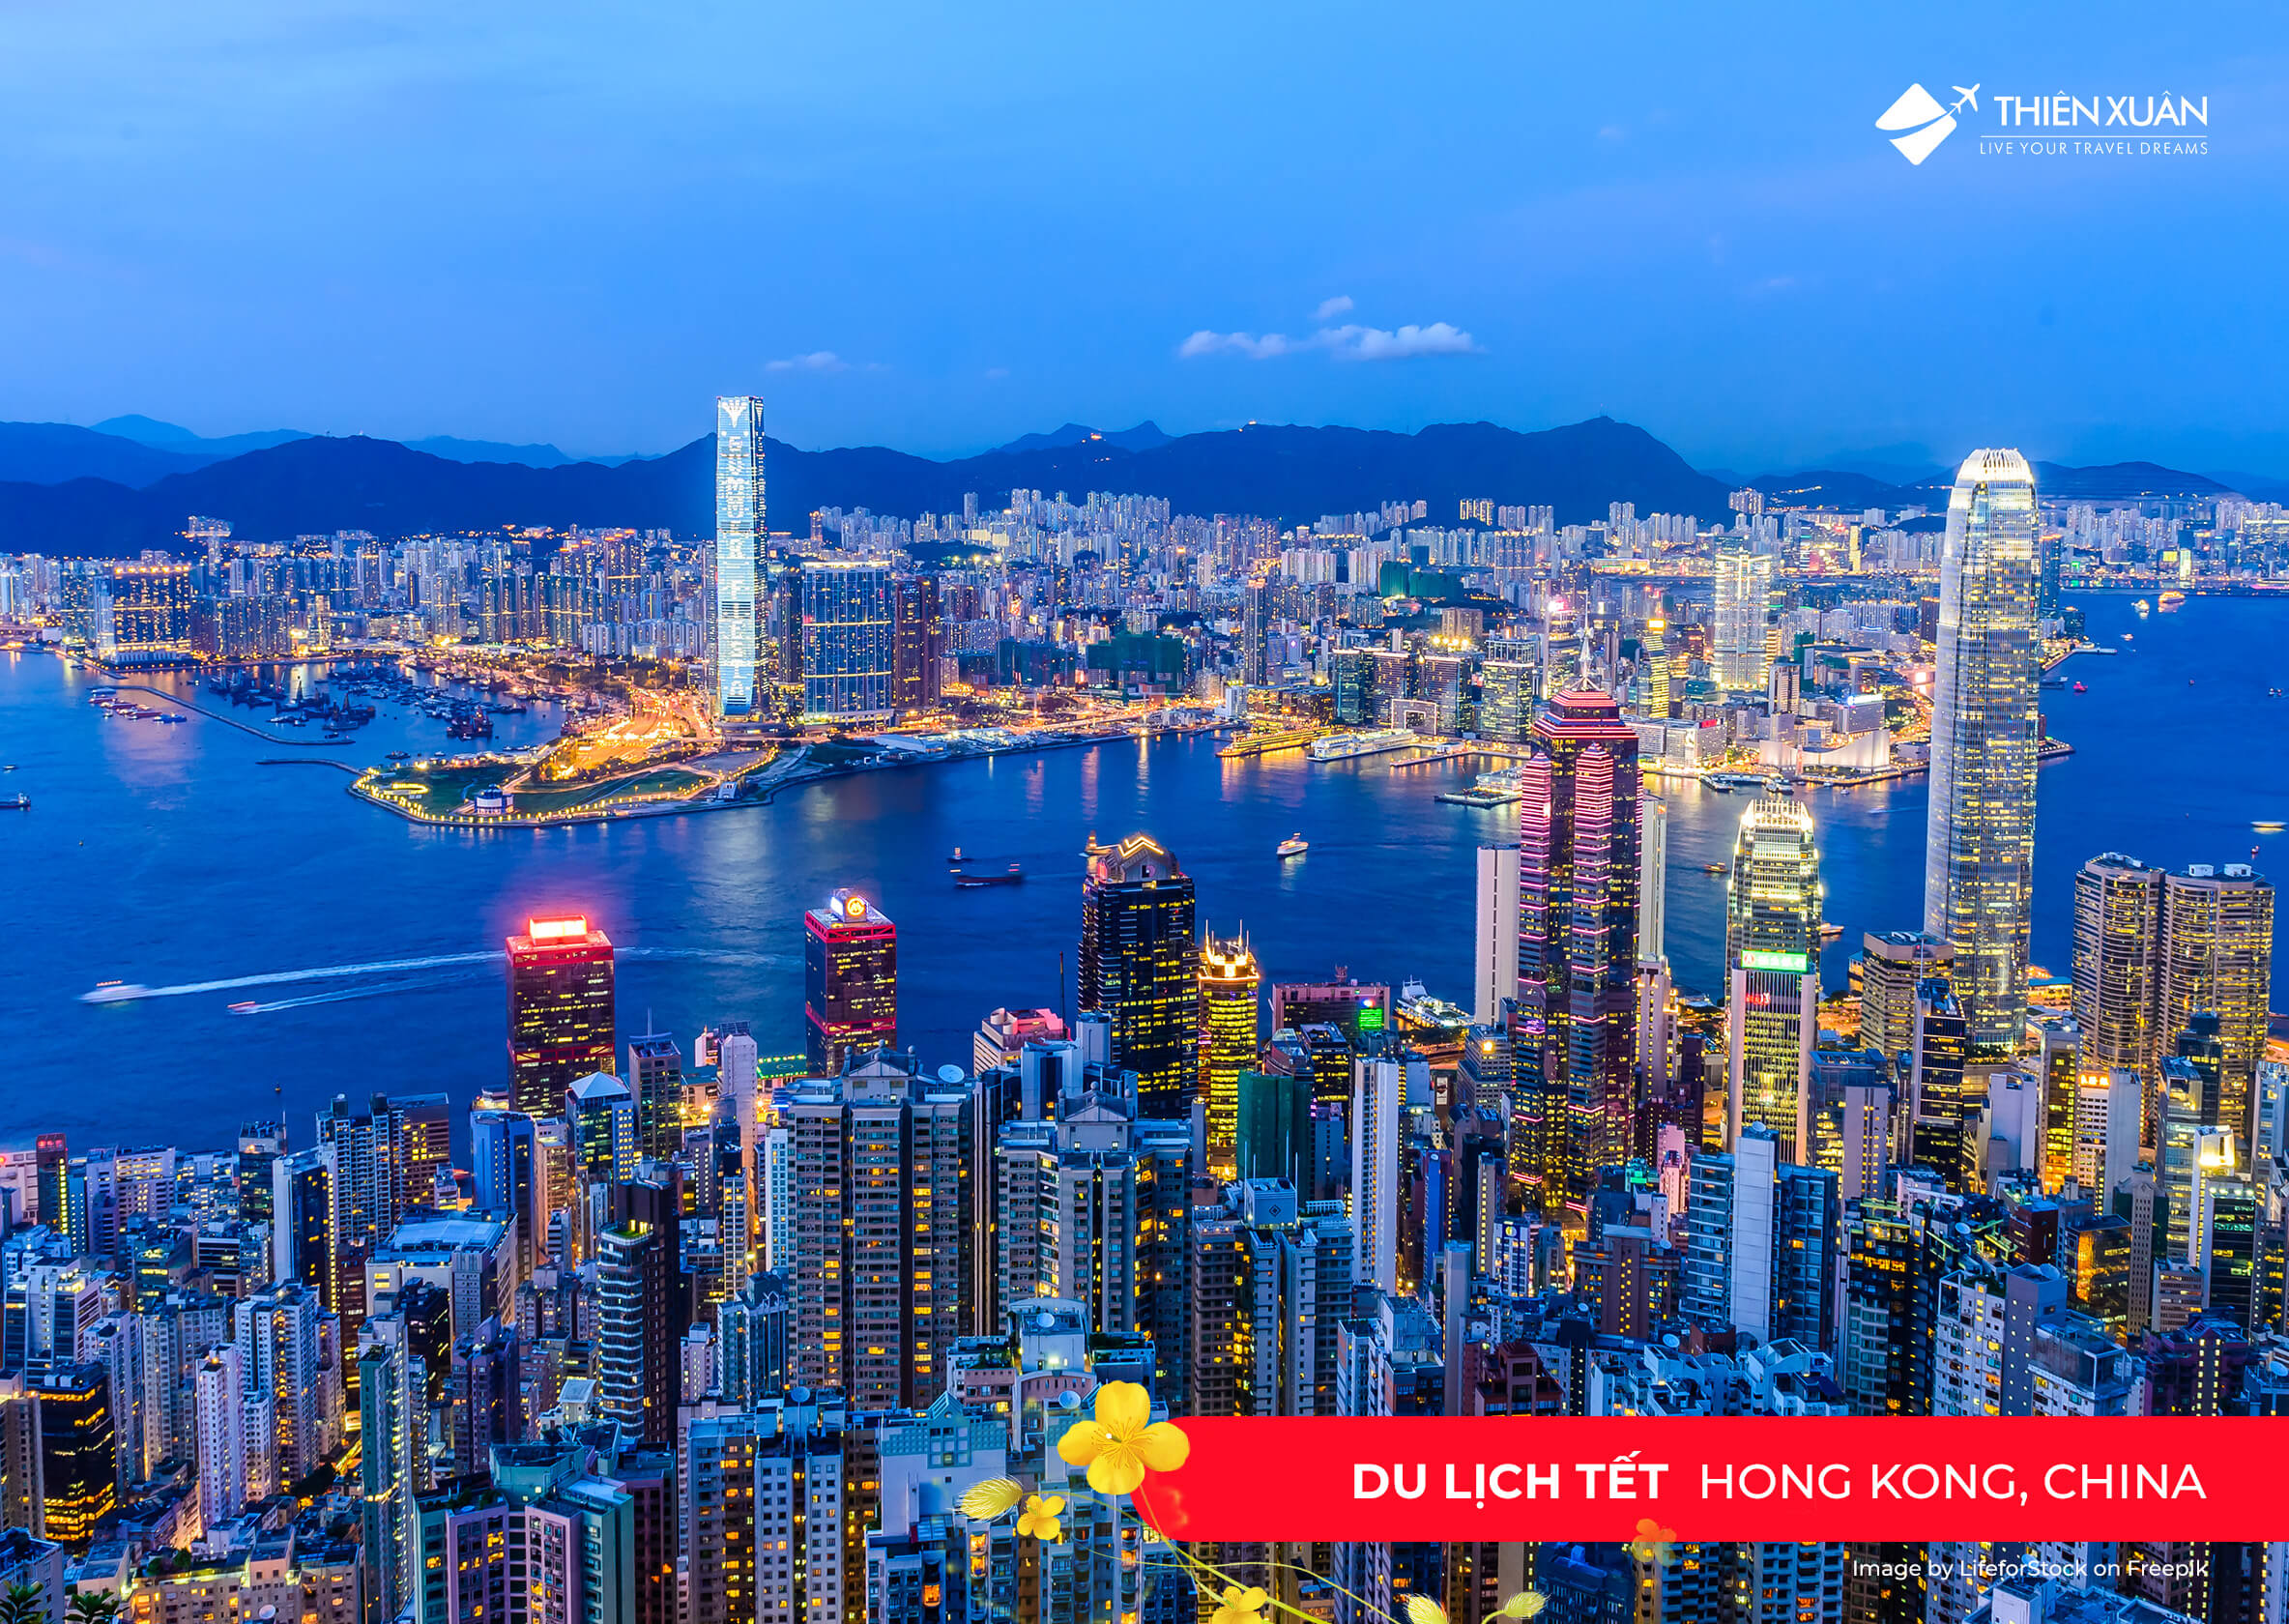 Hong Kong Skyline, Image by LifeforStock on Freepik